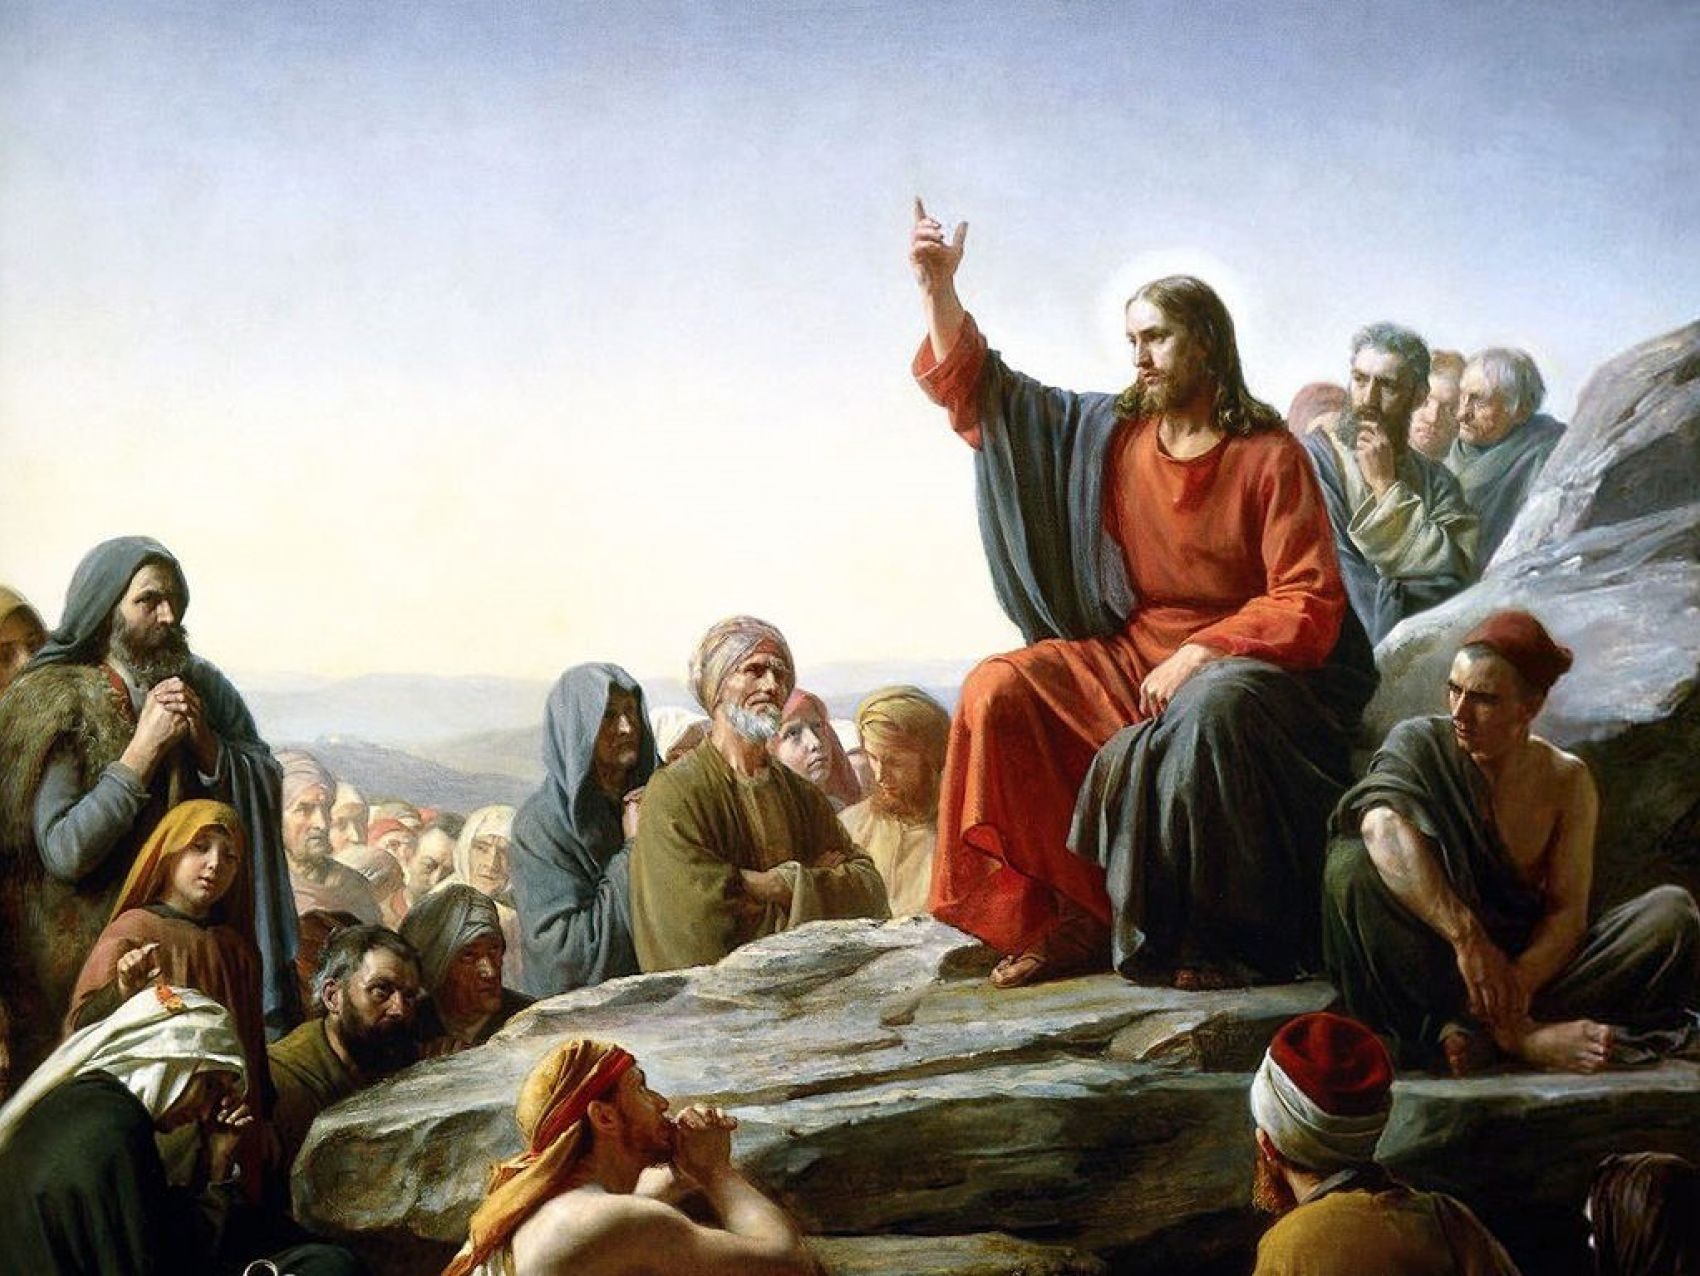 The Sermon On The Mount - The Beatitudes, The Our Father Prayer